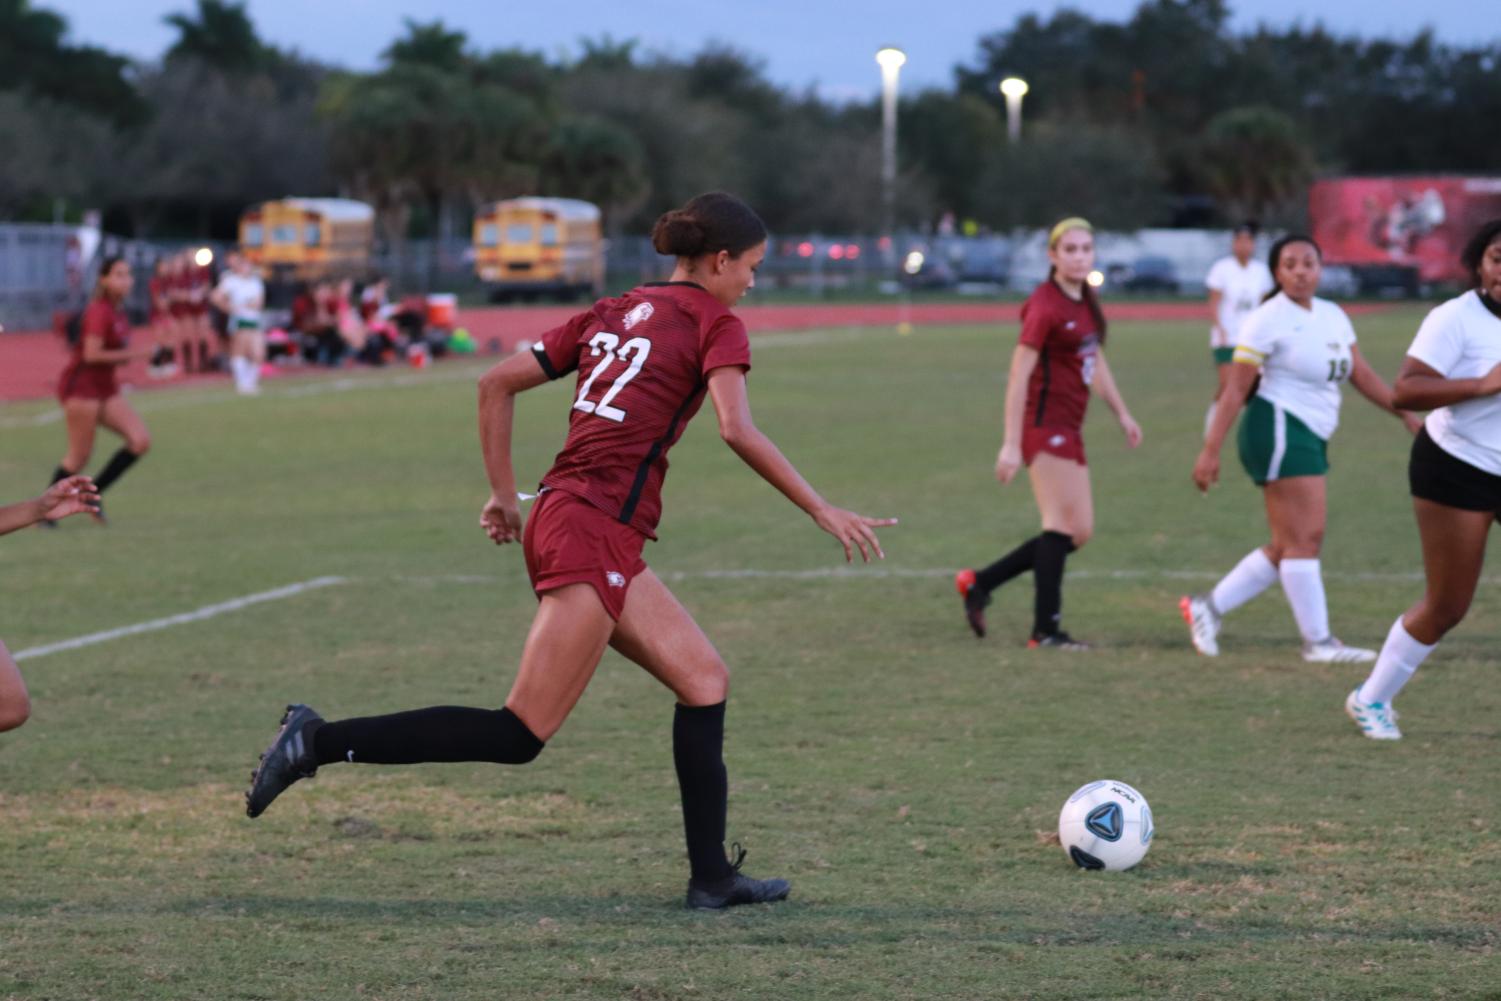 Schoharie girls' soccer star Krohn scores final goal of record-setting  career in regional loss, Sports